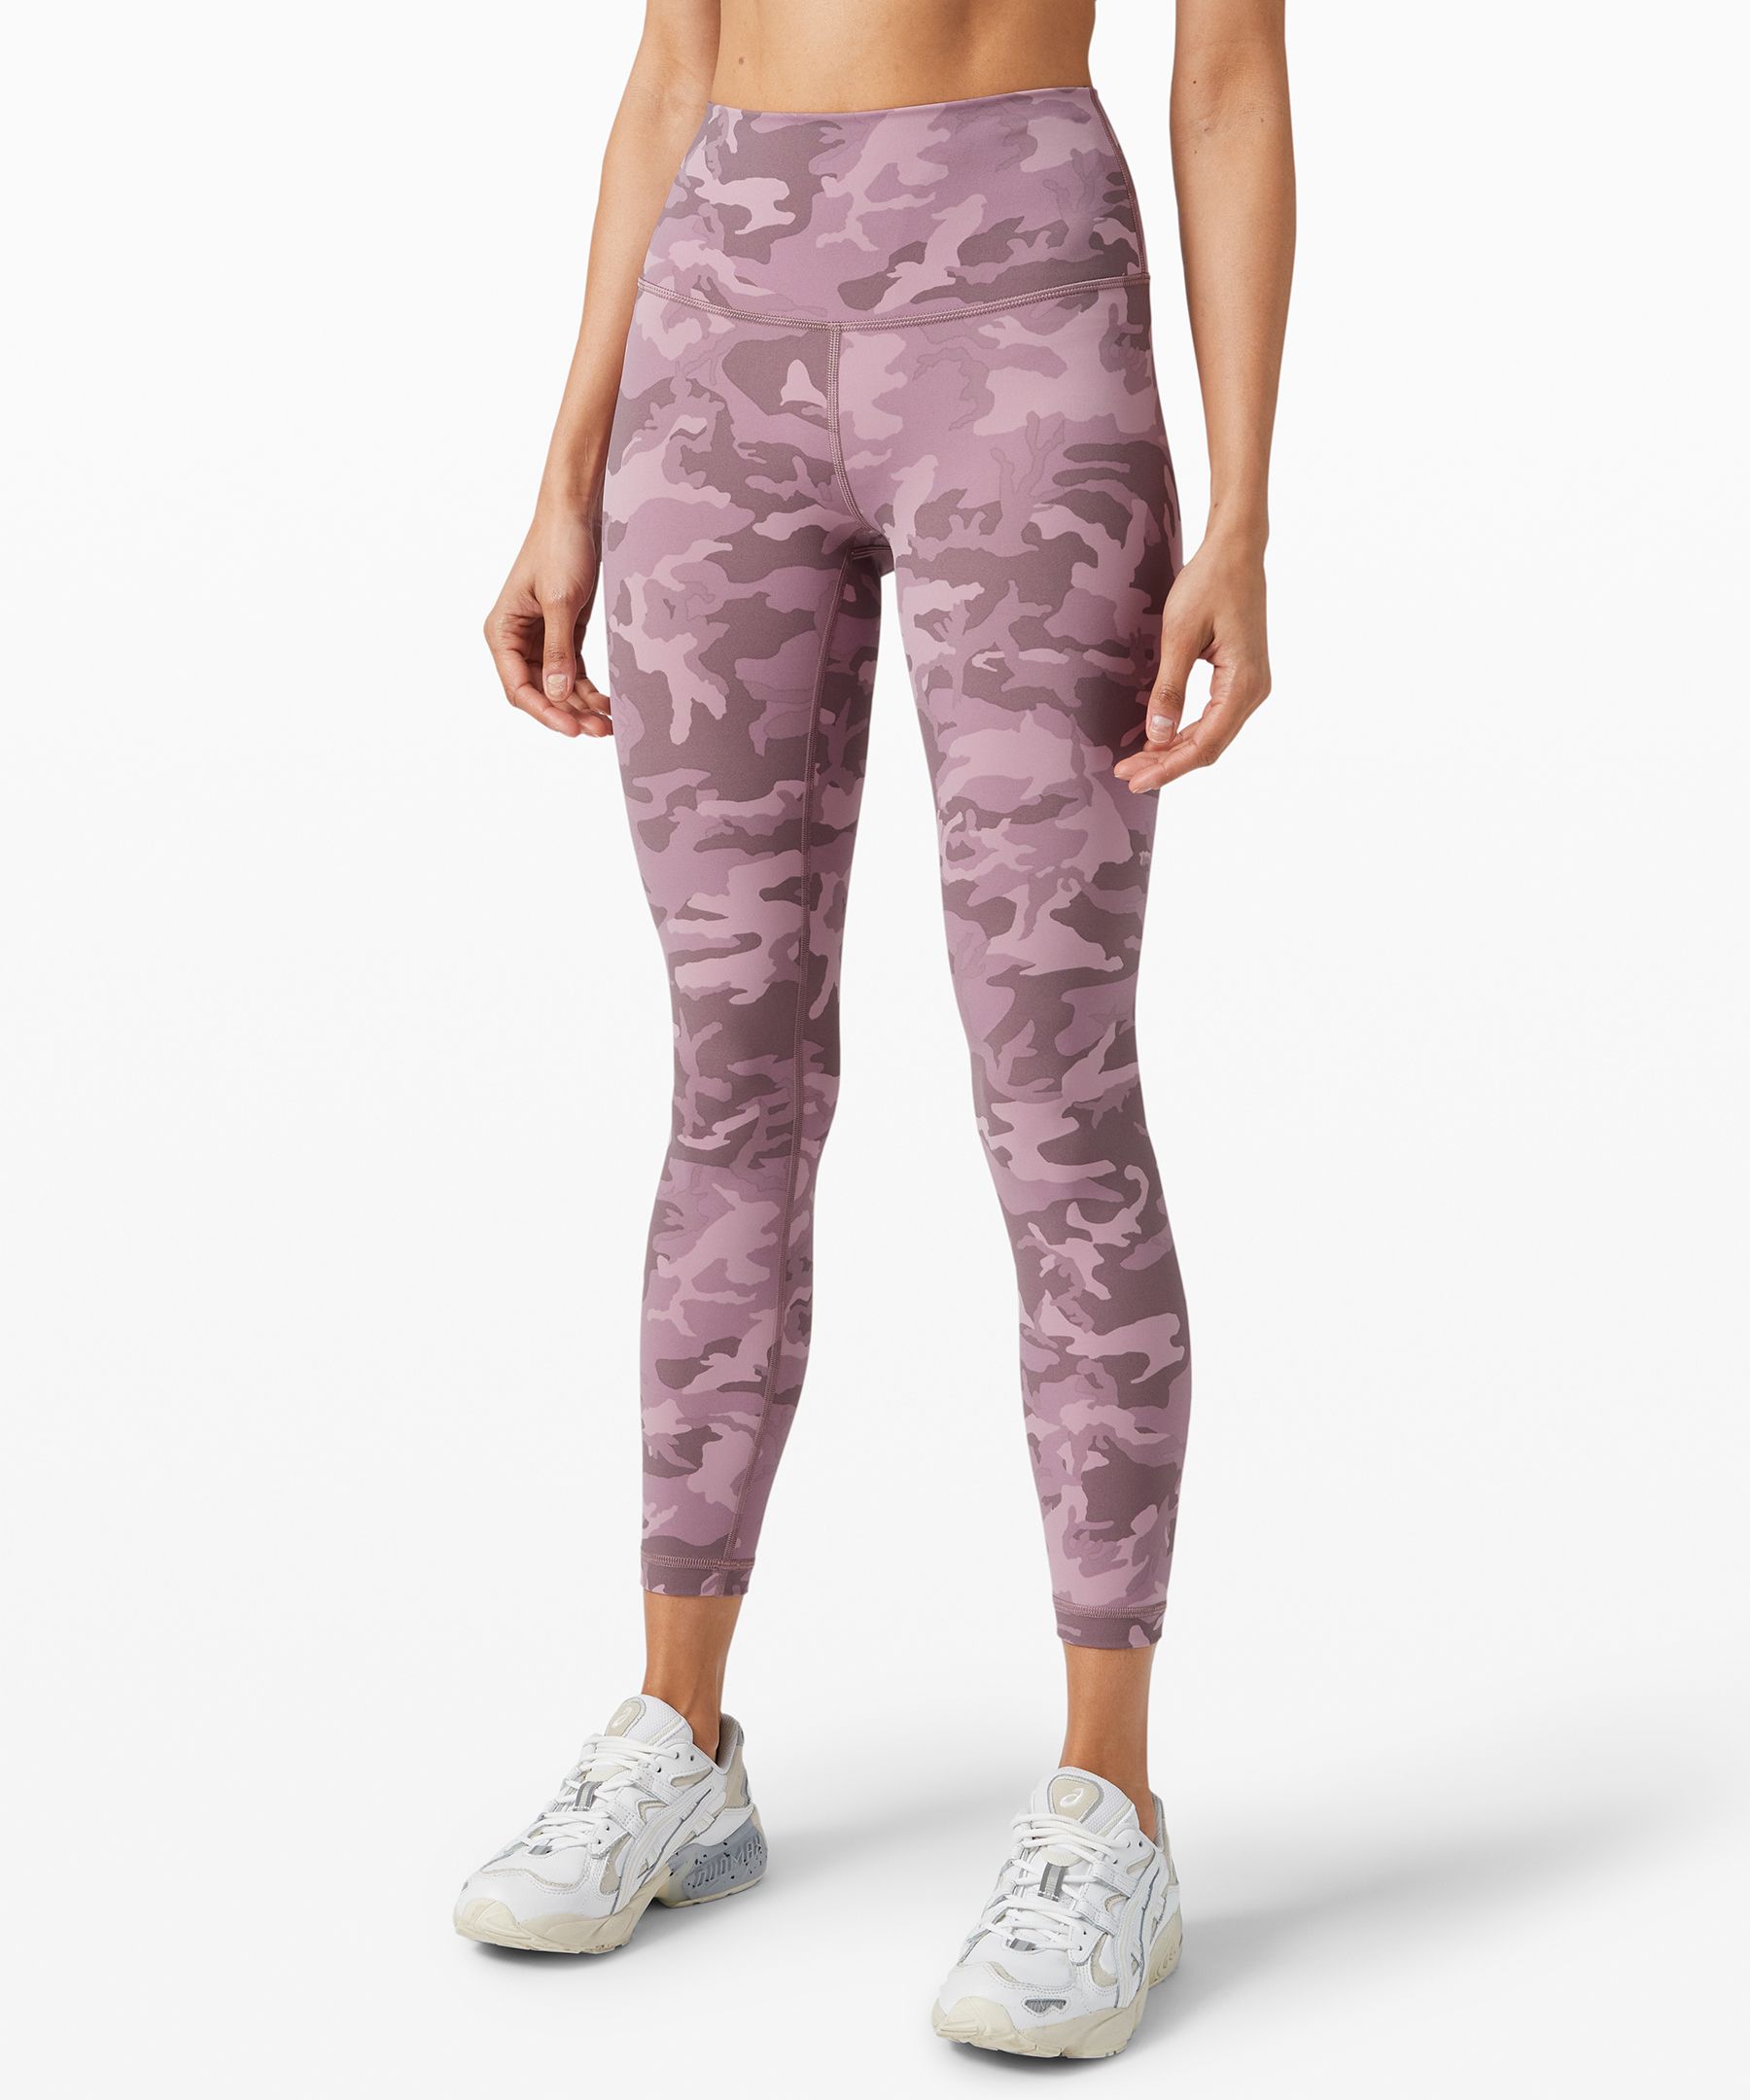 pink lululemon leggings